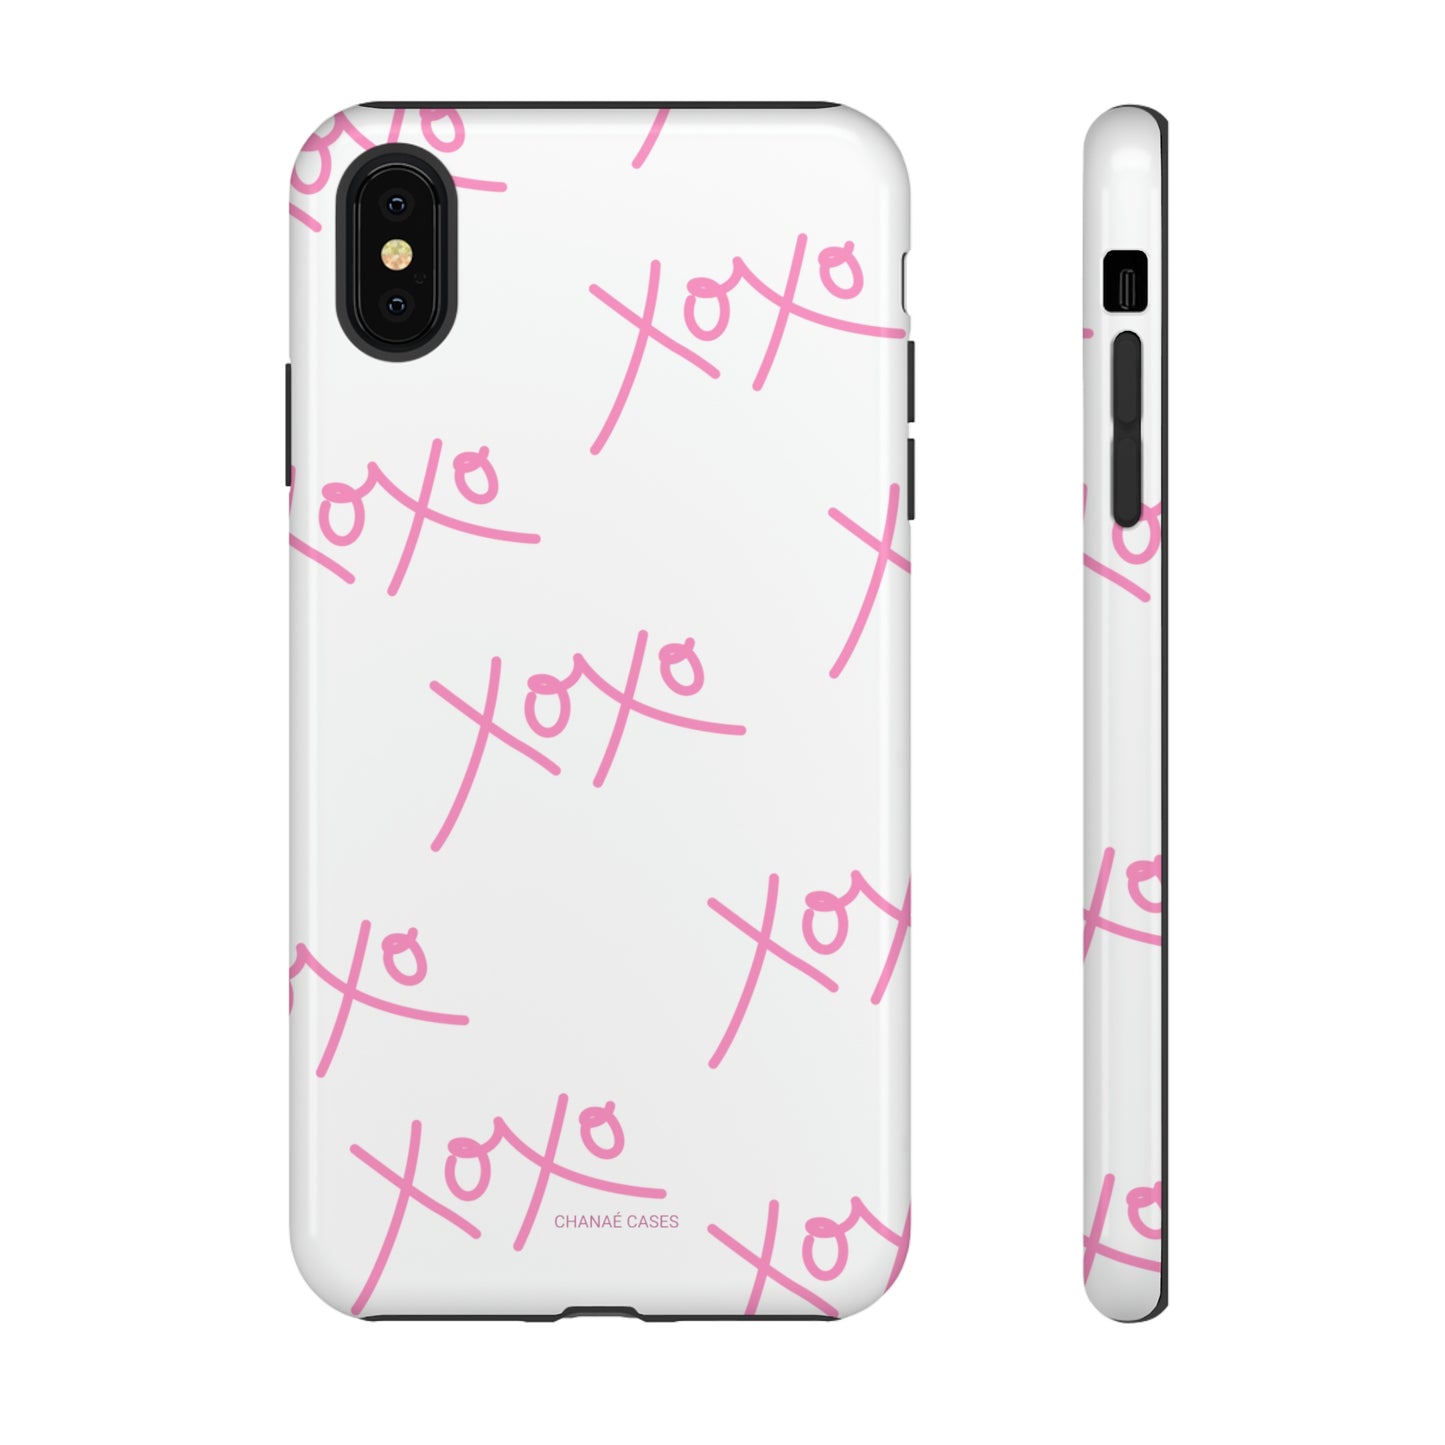 Hugs & Kisses iPhone "Tough" Case (White)